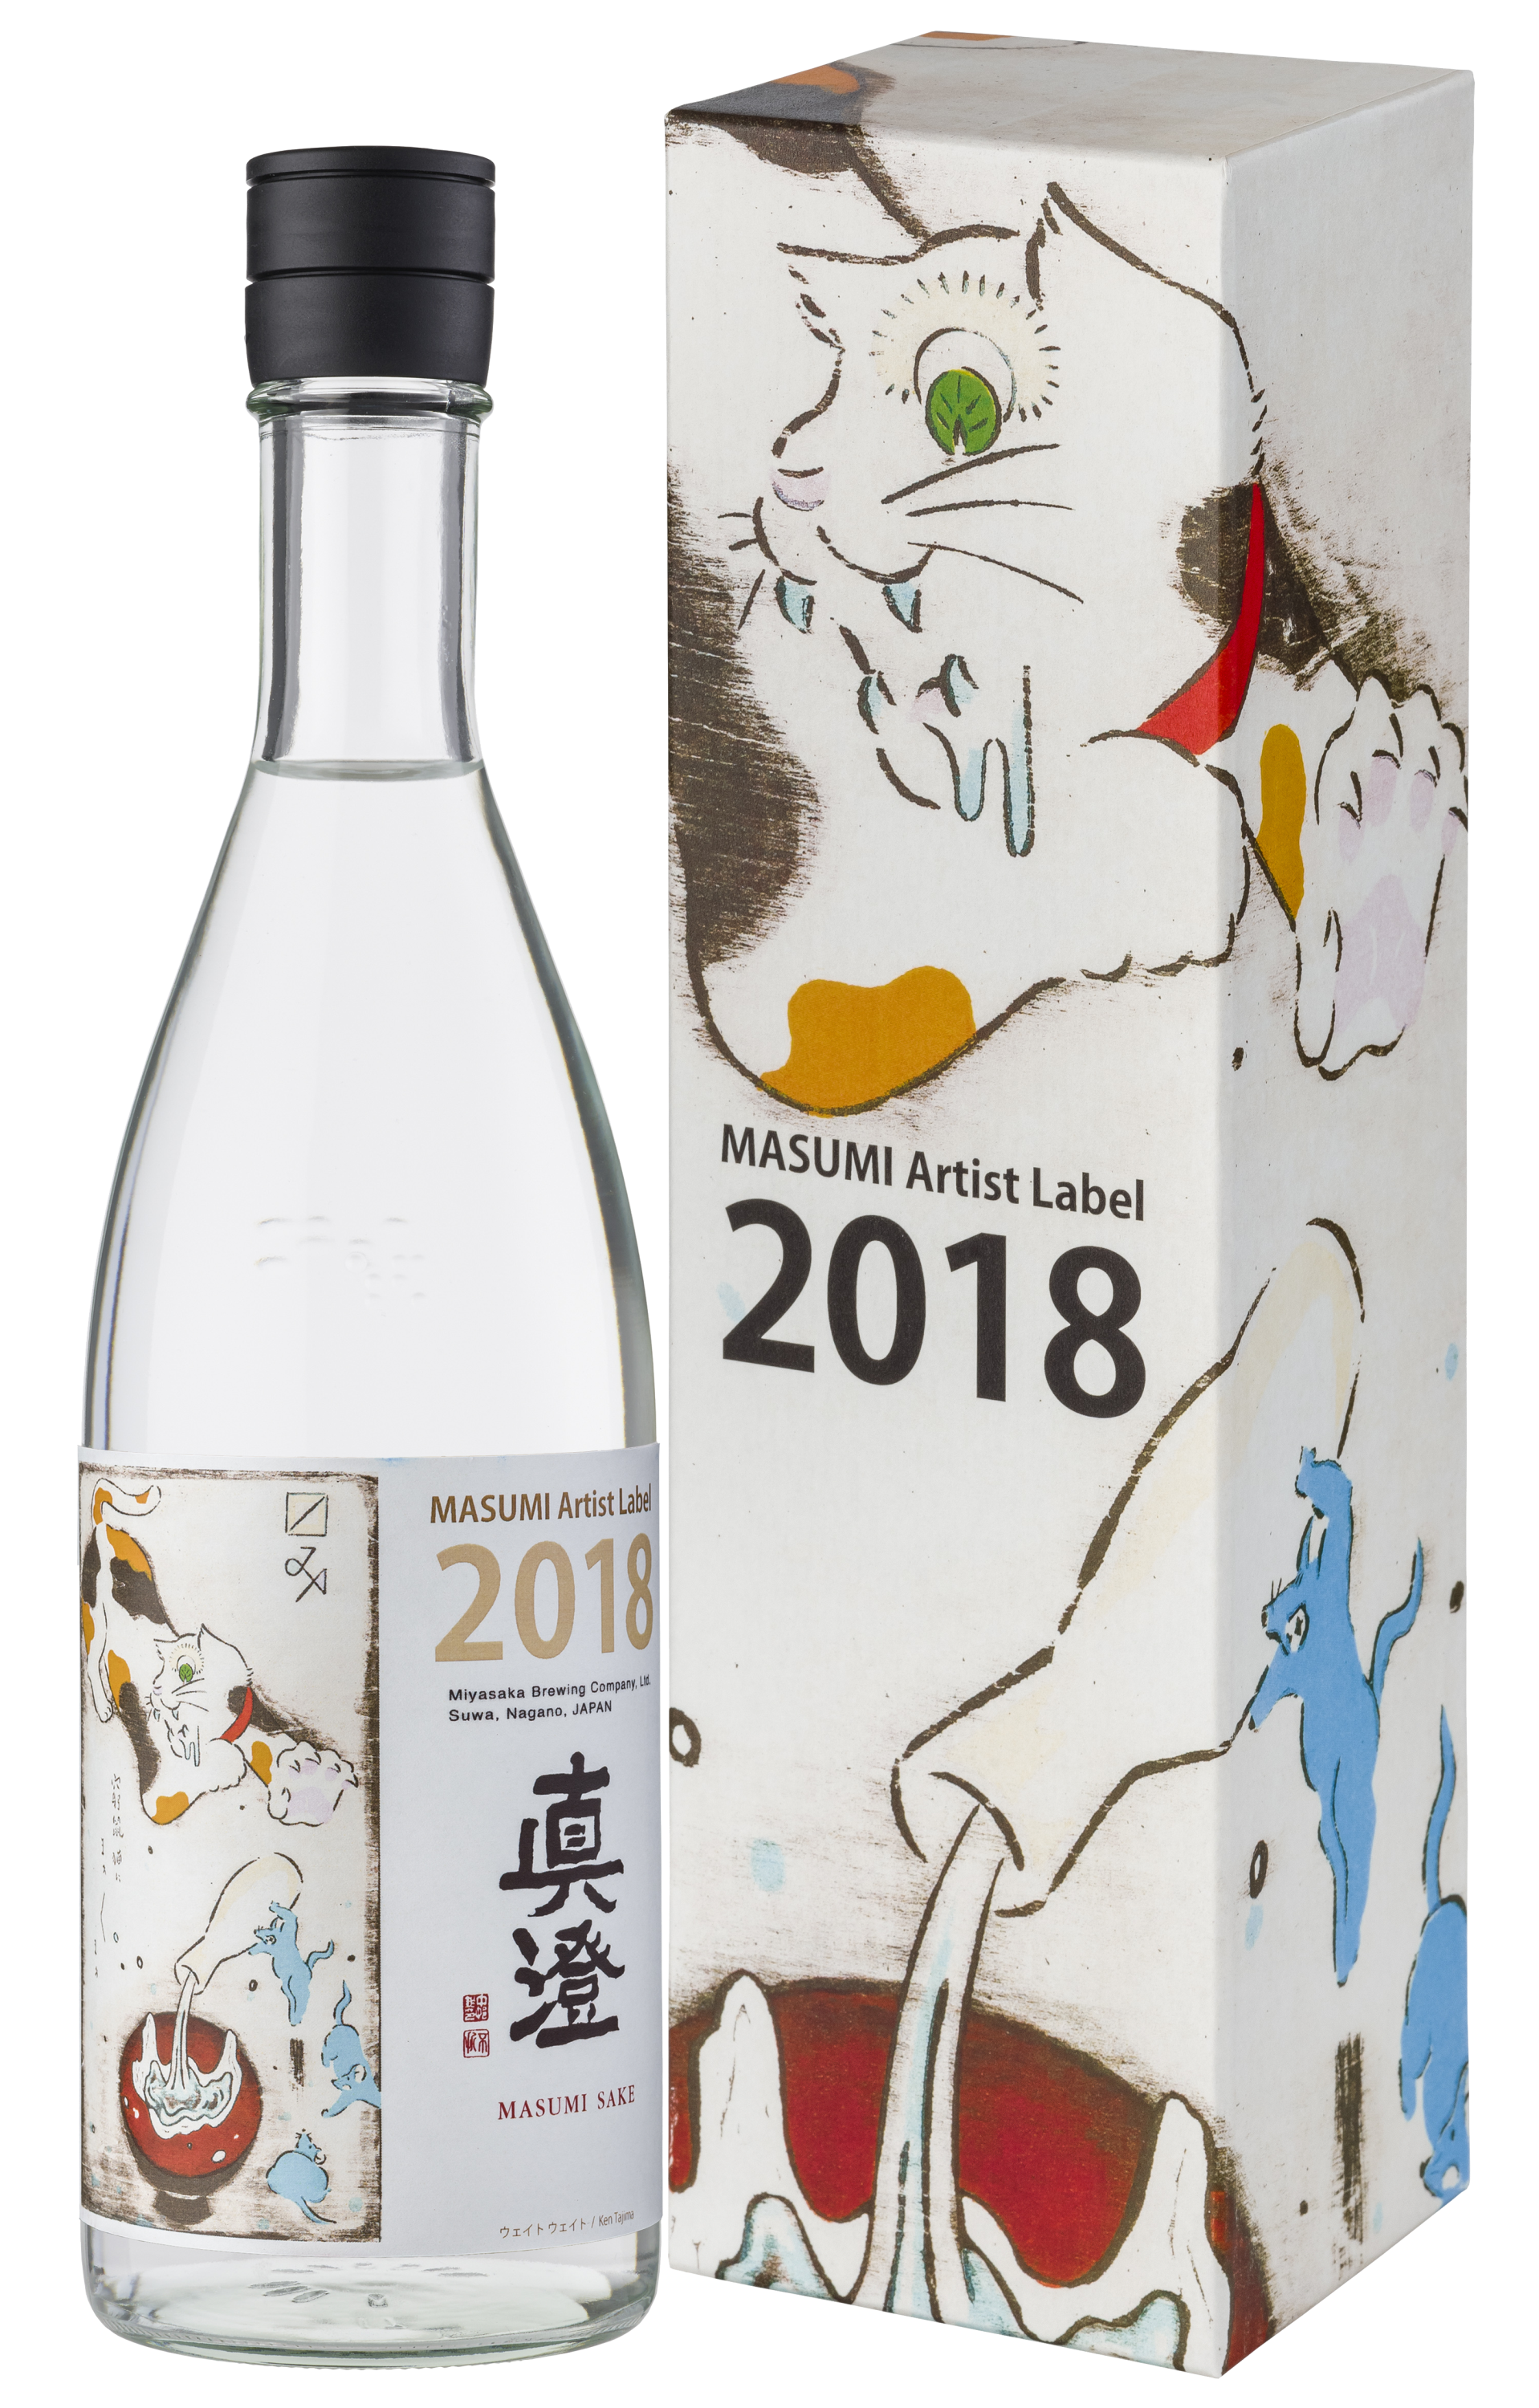 Miyasaka Masumi Artist Label 2018